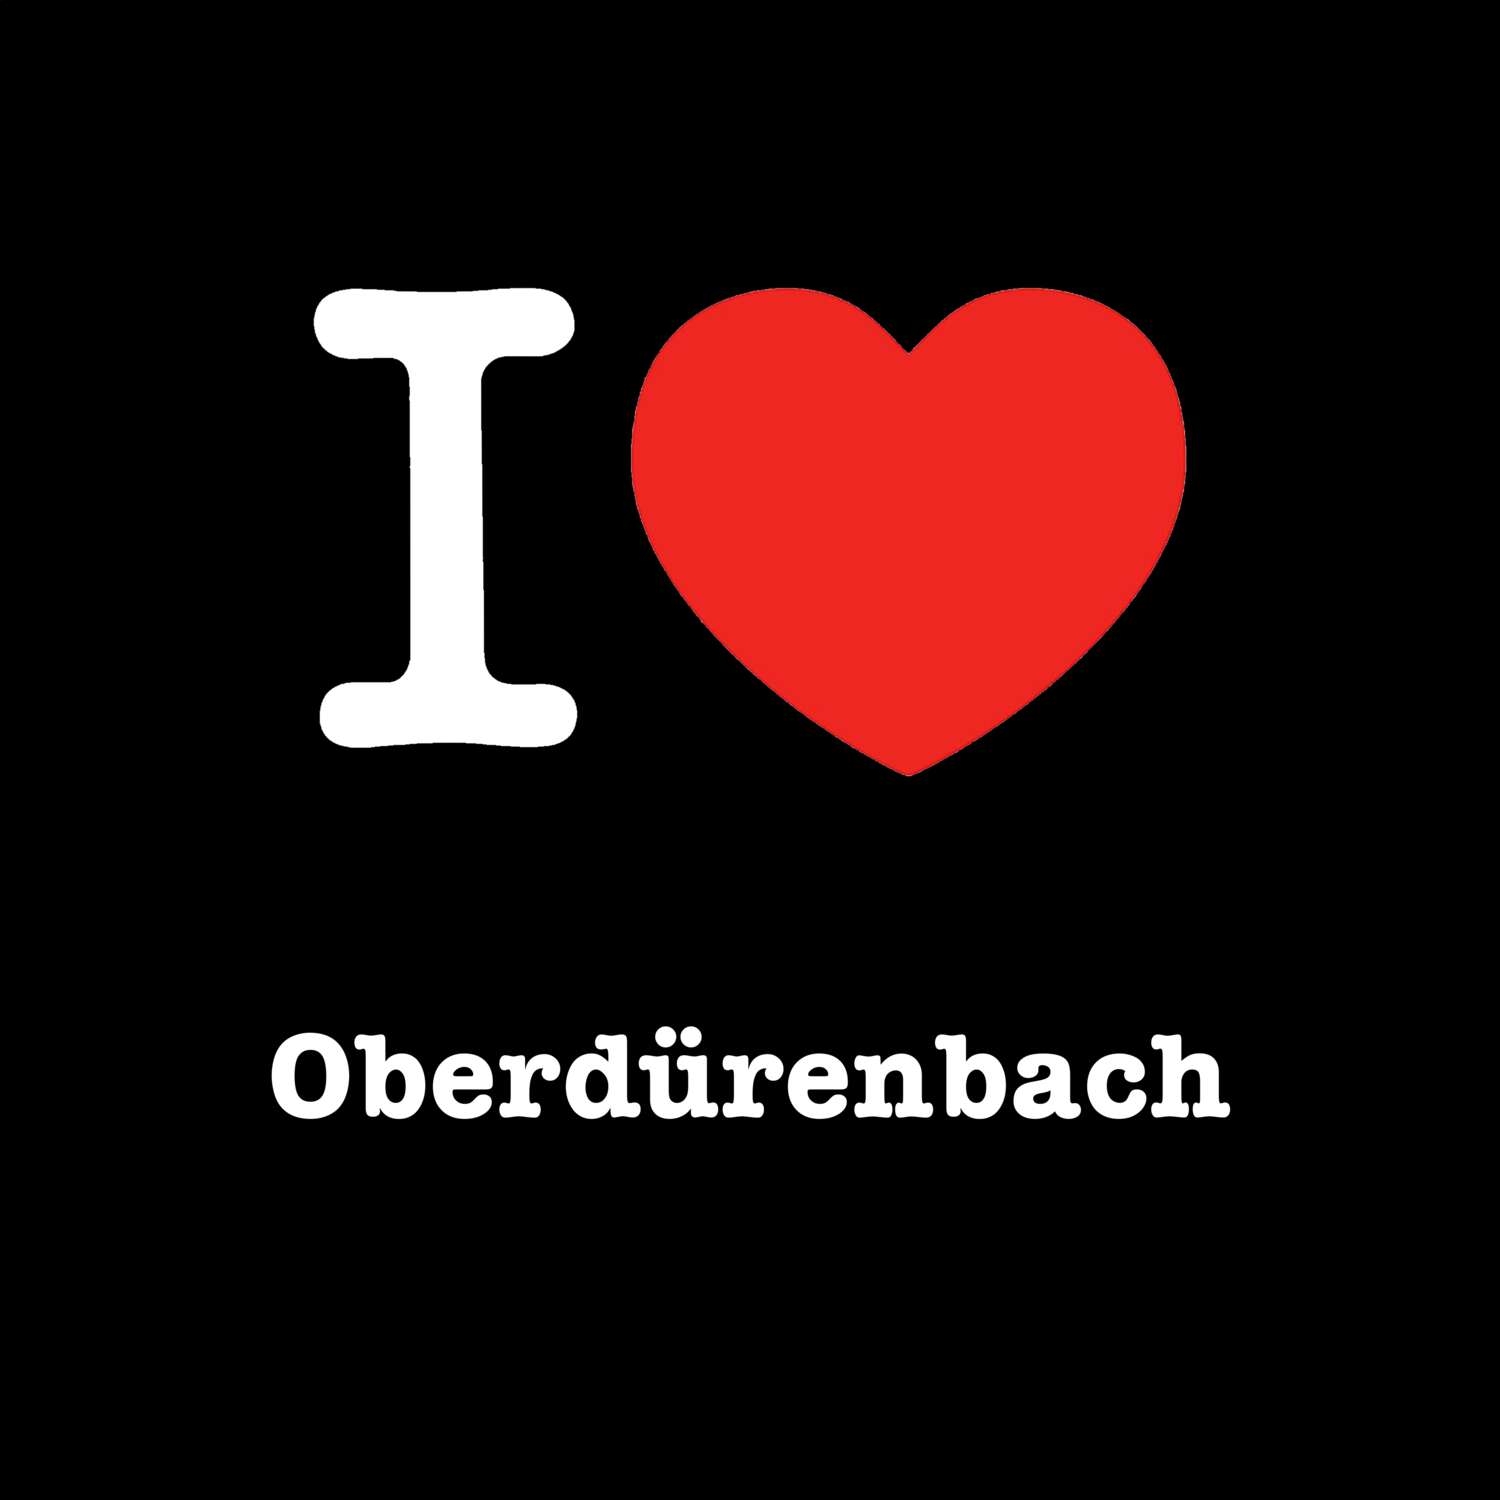 Oberdürenbach T-Shirt »I love«